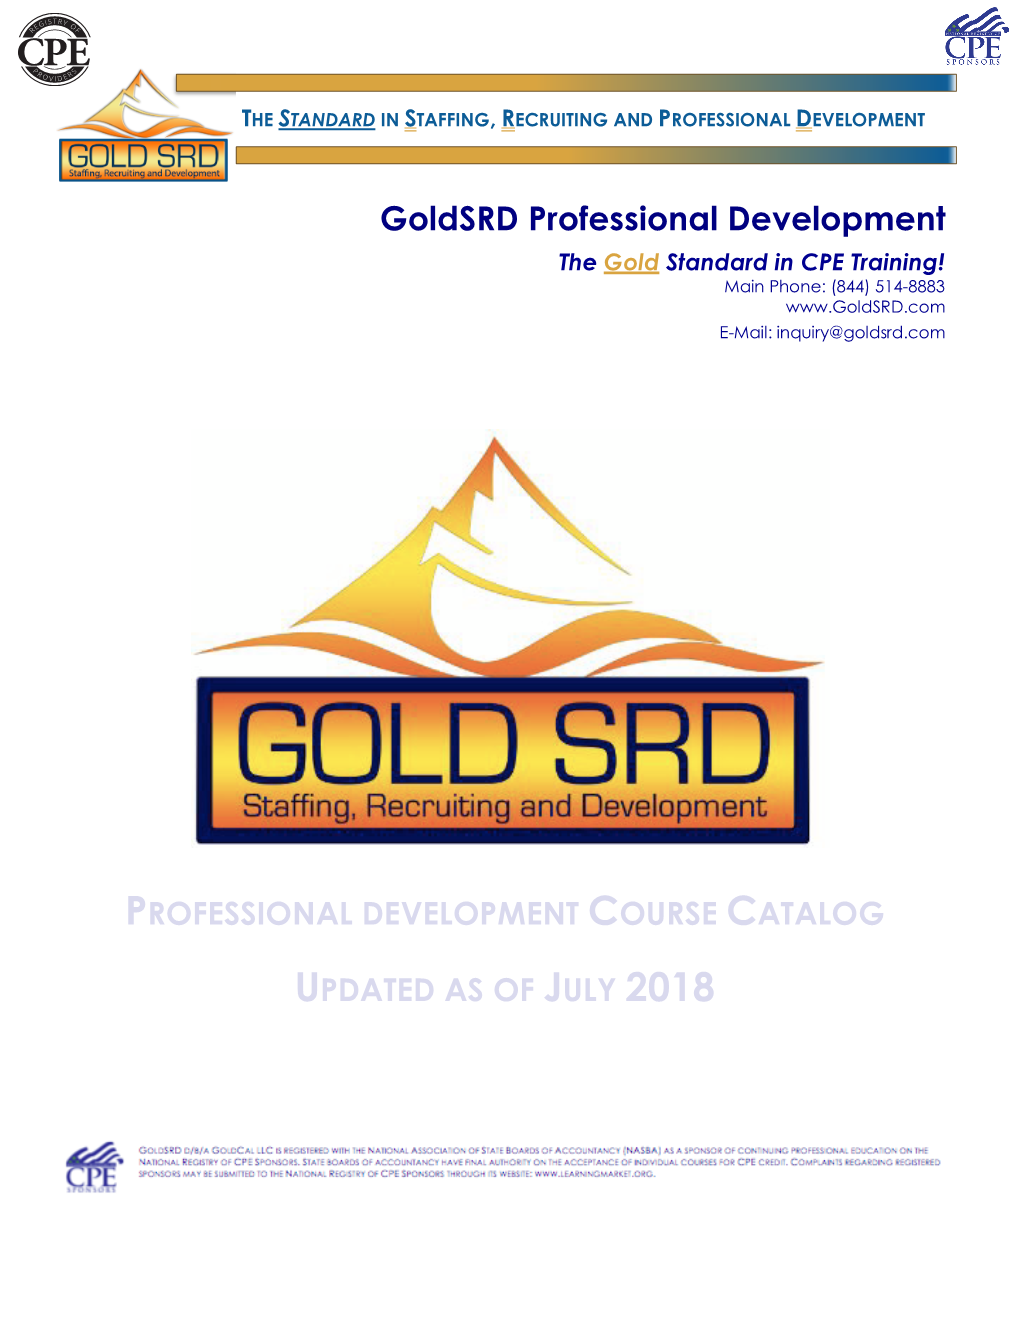 Goldsrd Professional Development the Gold Standard in CPE Training! Main Phone: (844) 514-8883 E-Mail: Inquiry@Goldsrd.Com